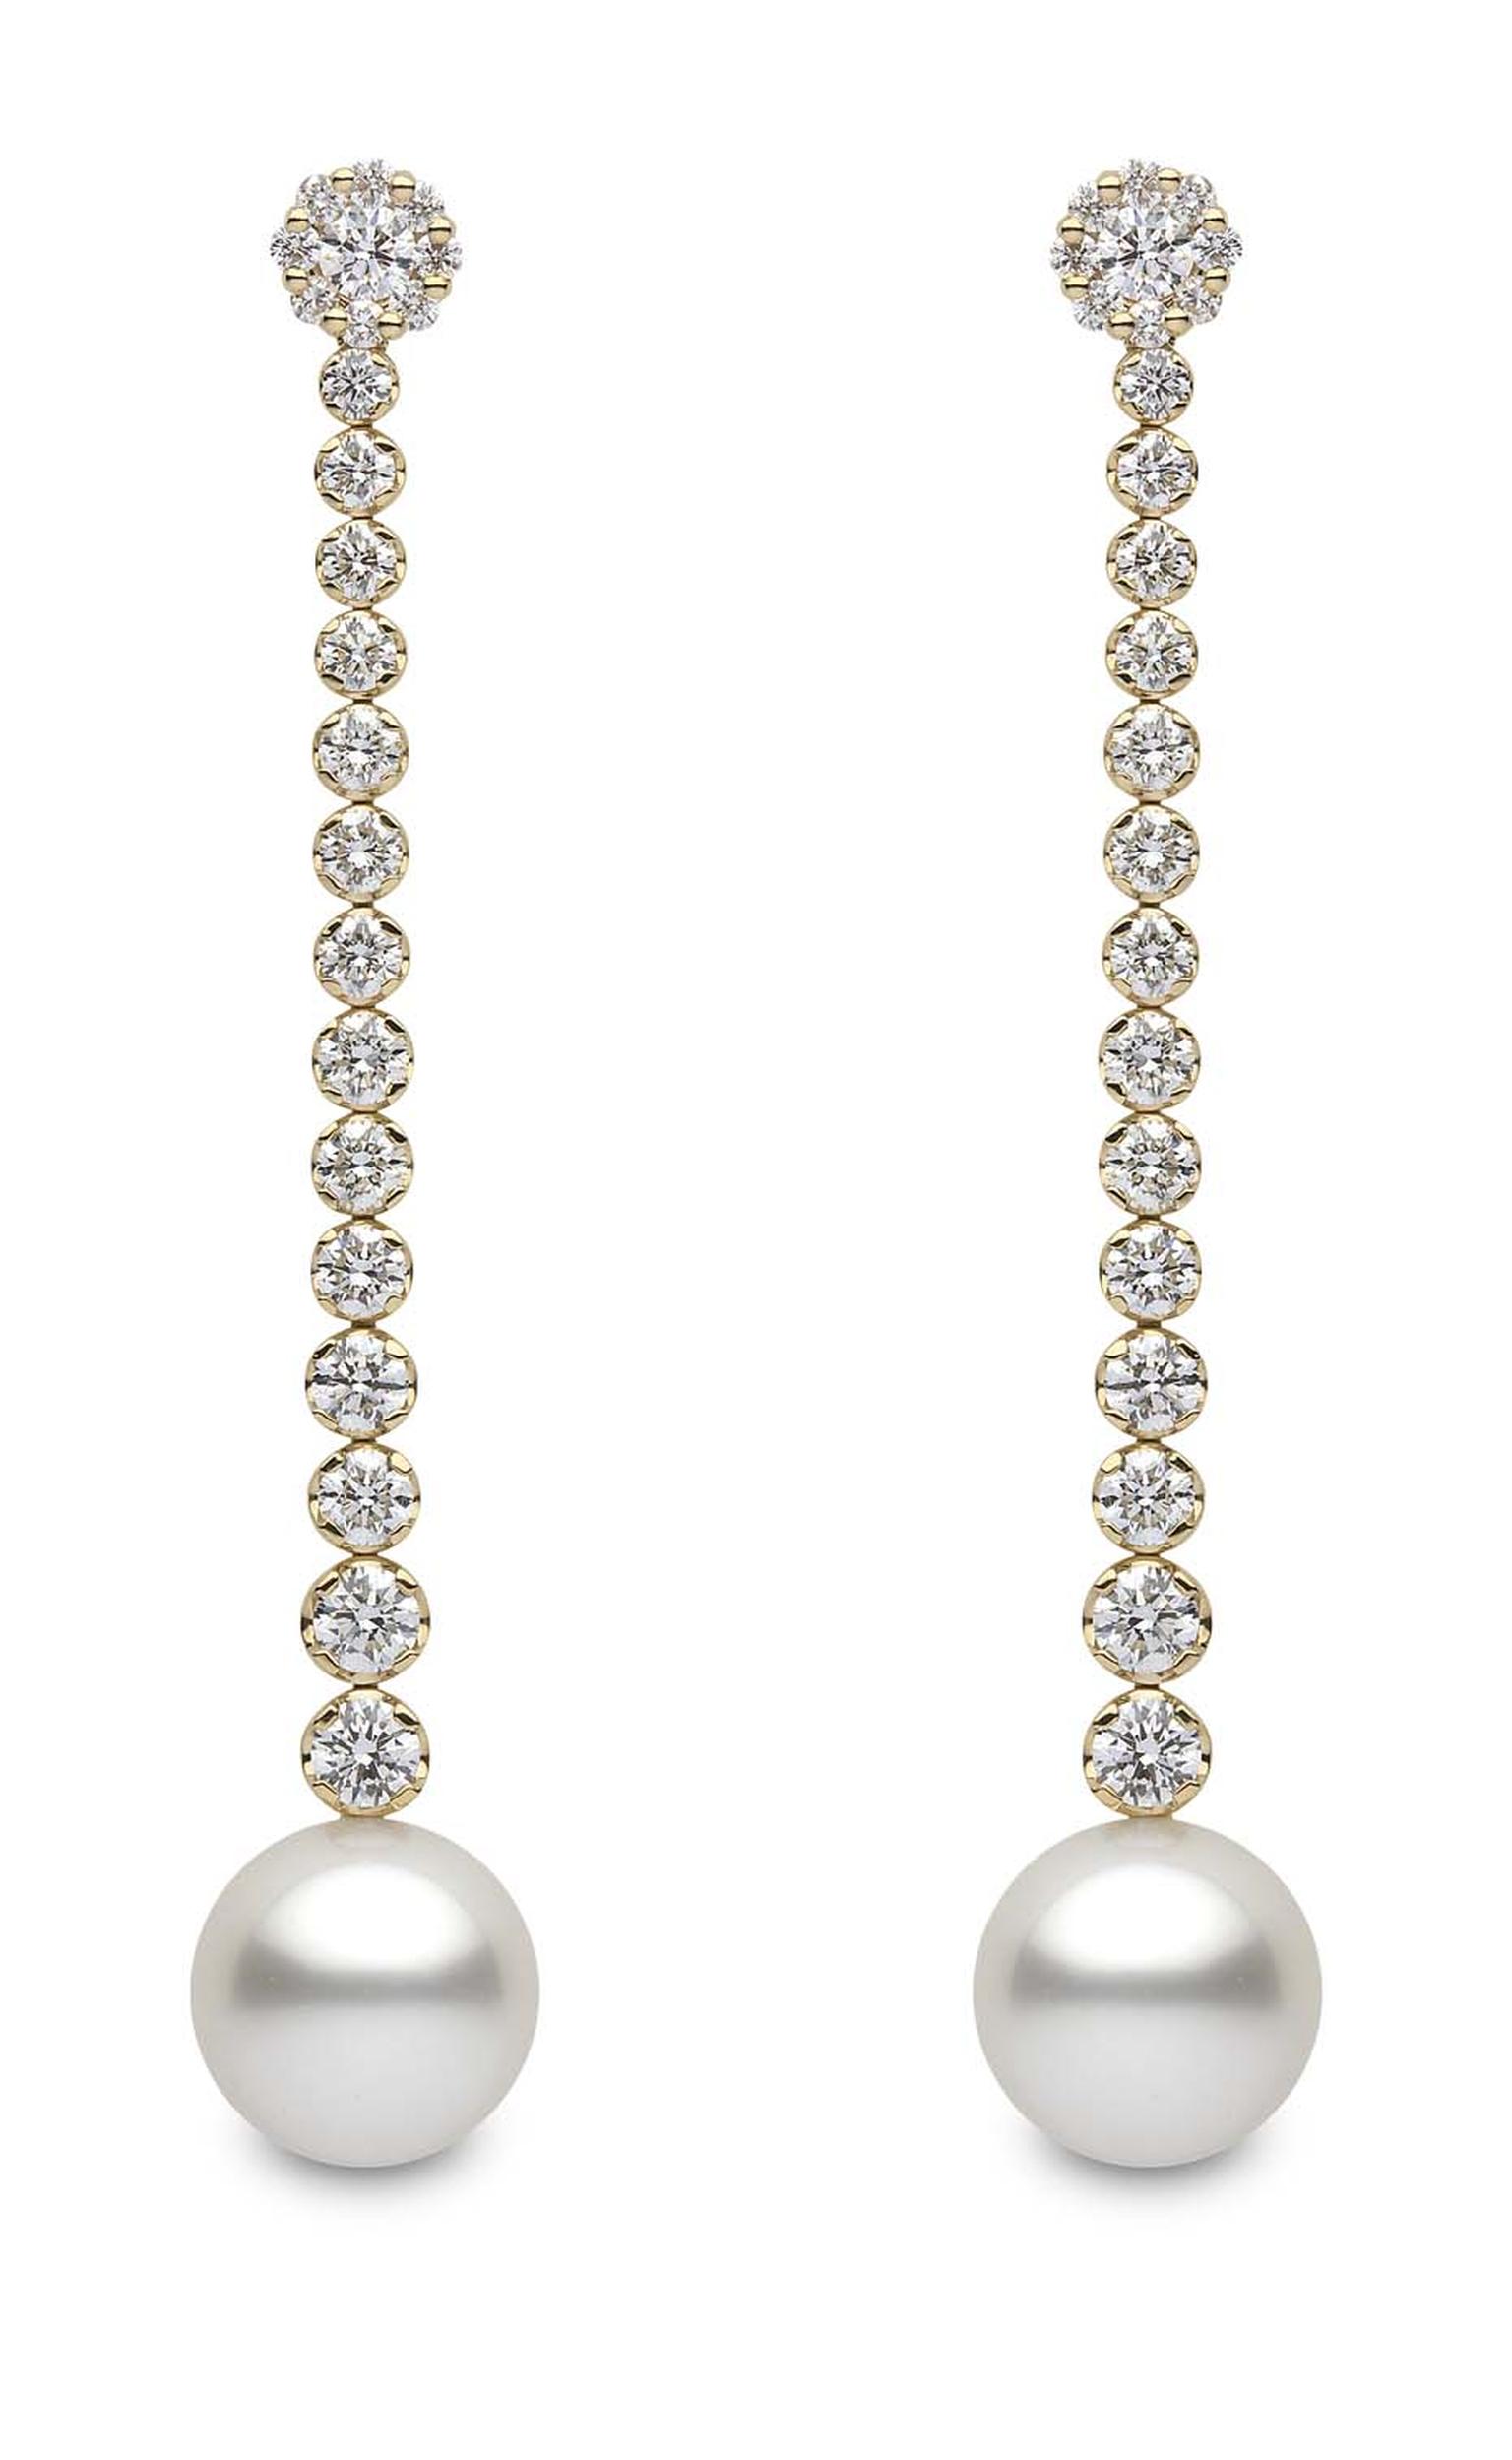 YOKO London Australian South Sea pearl earrings, as worn by actress Kara Tointon at the 2015 BAFTAs.